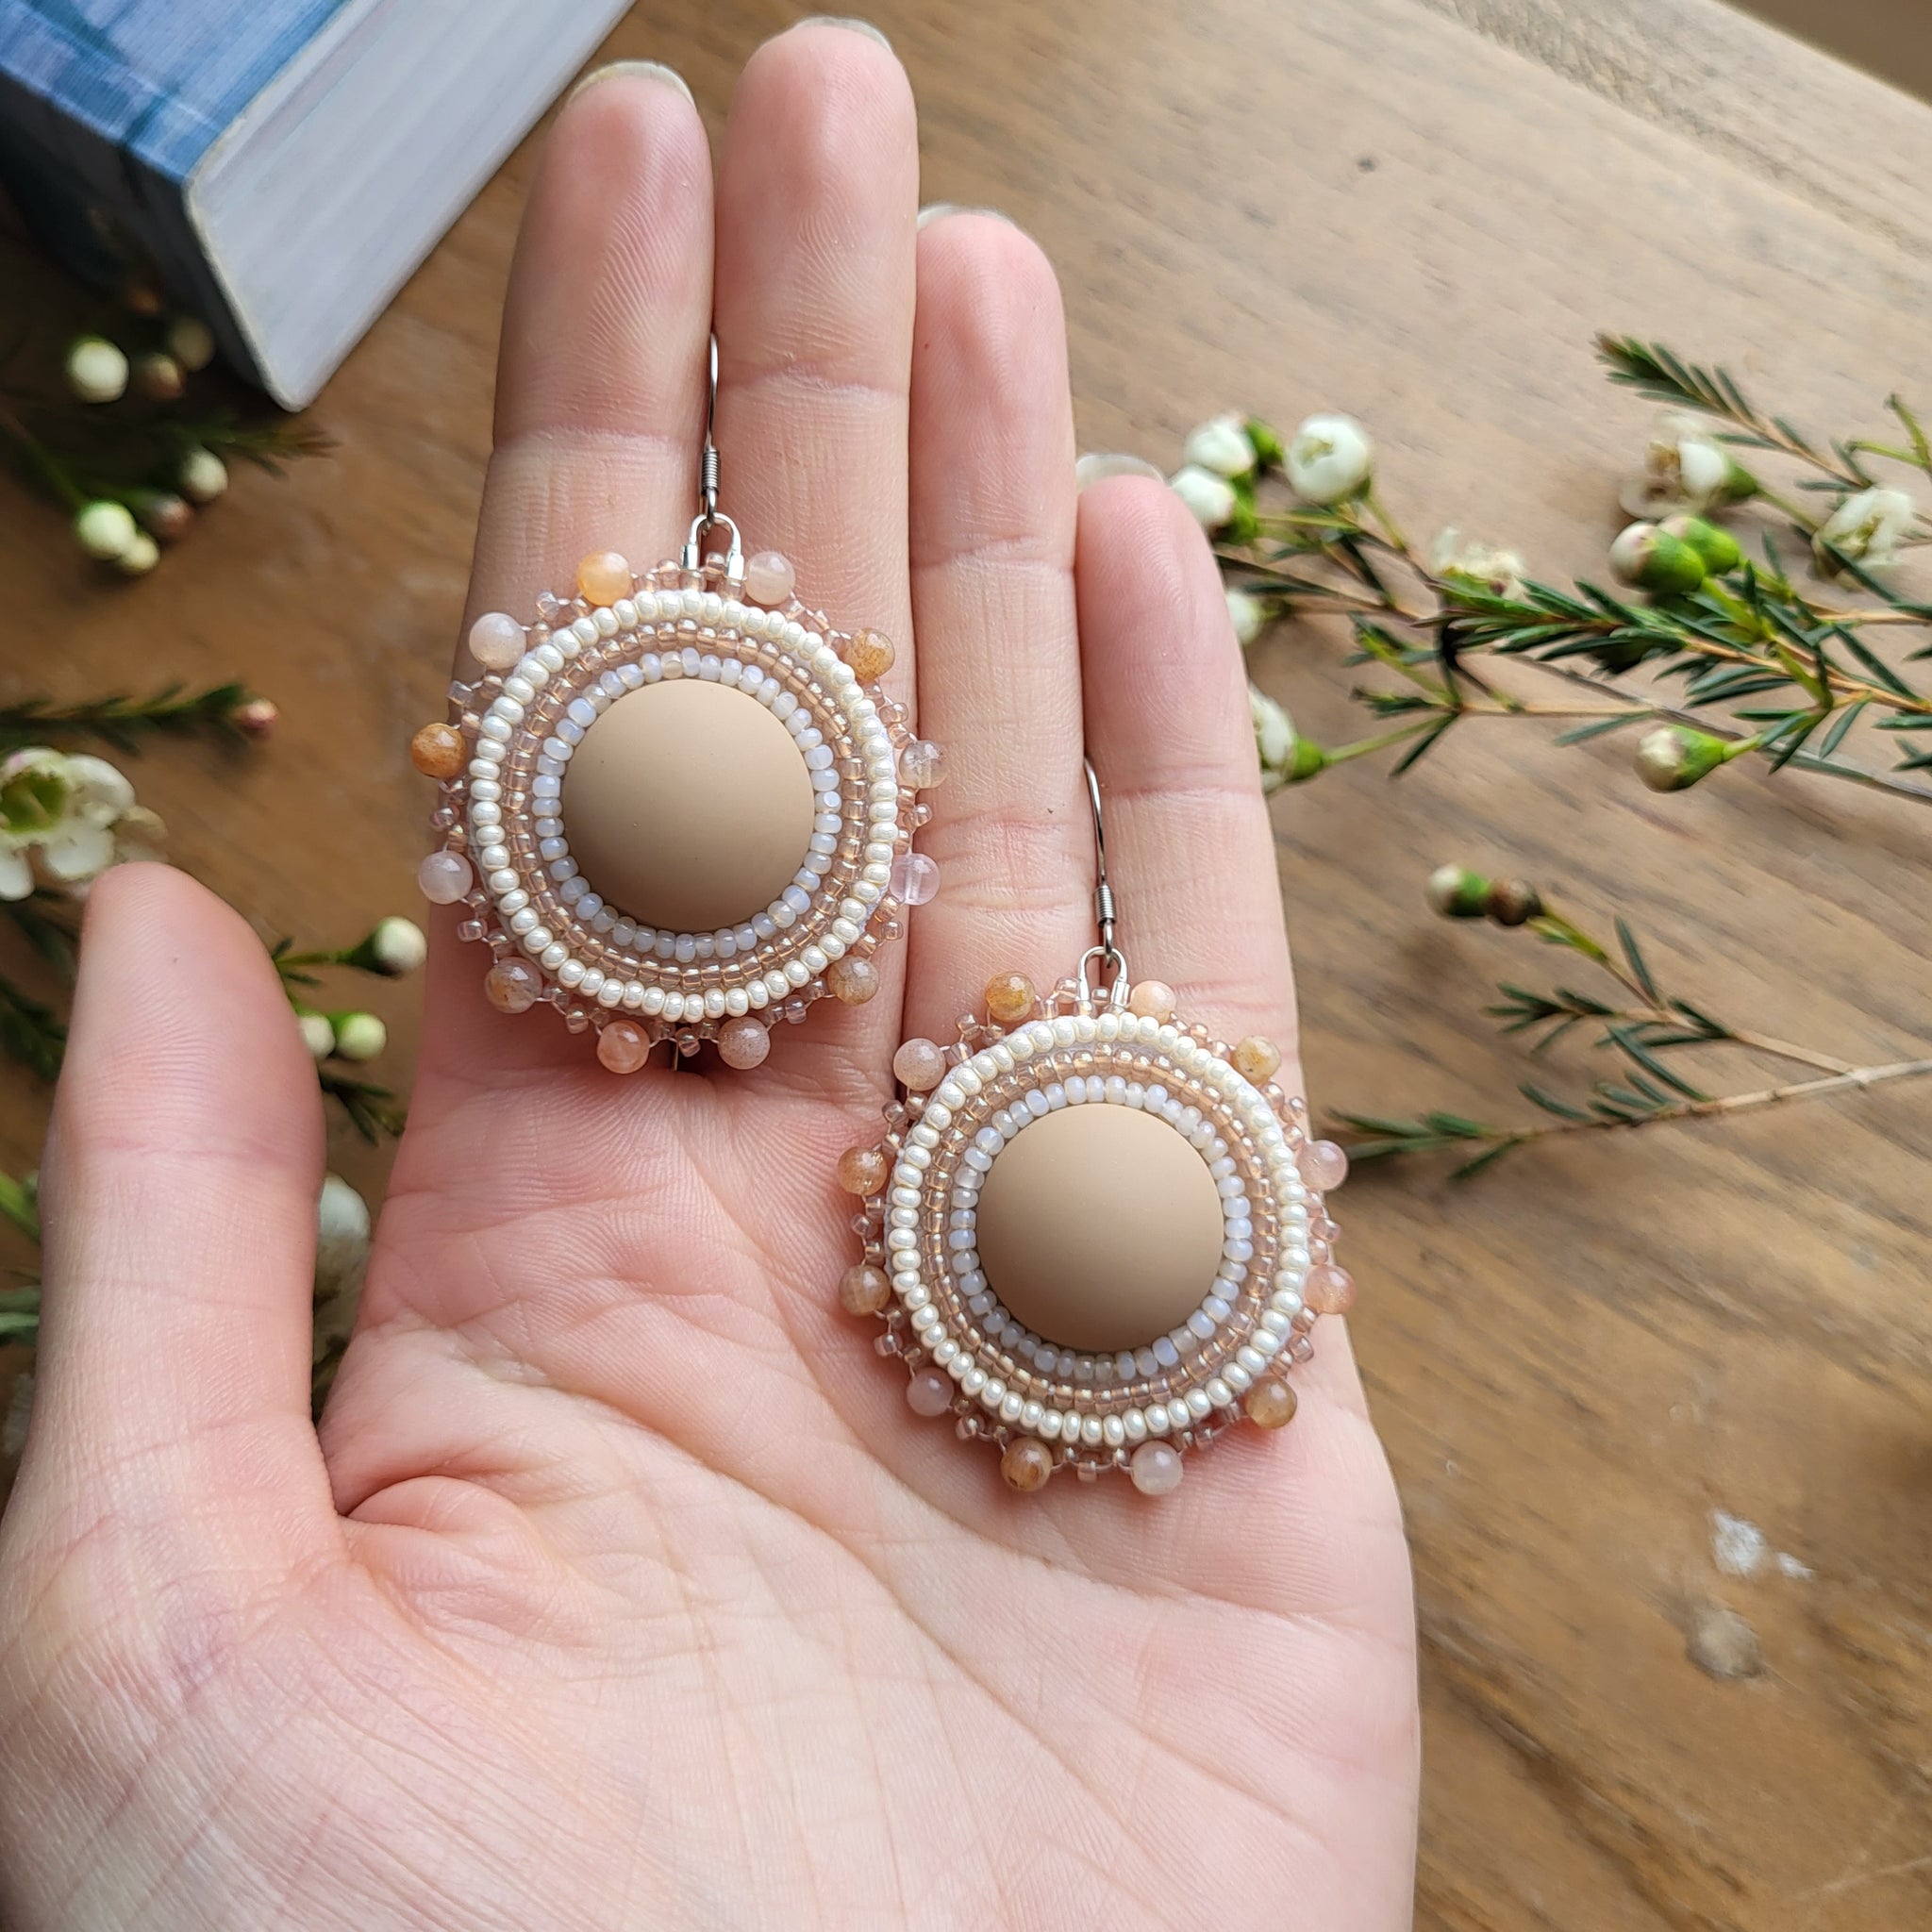 How To Make Gemstone Bead Earrings